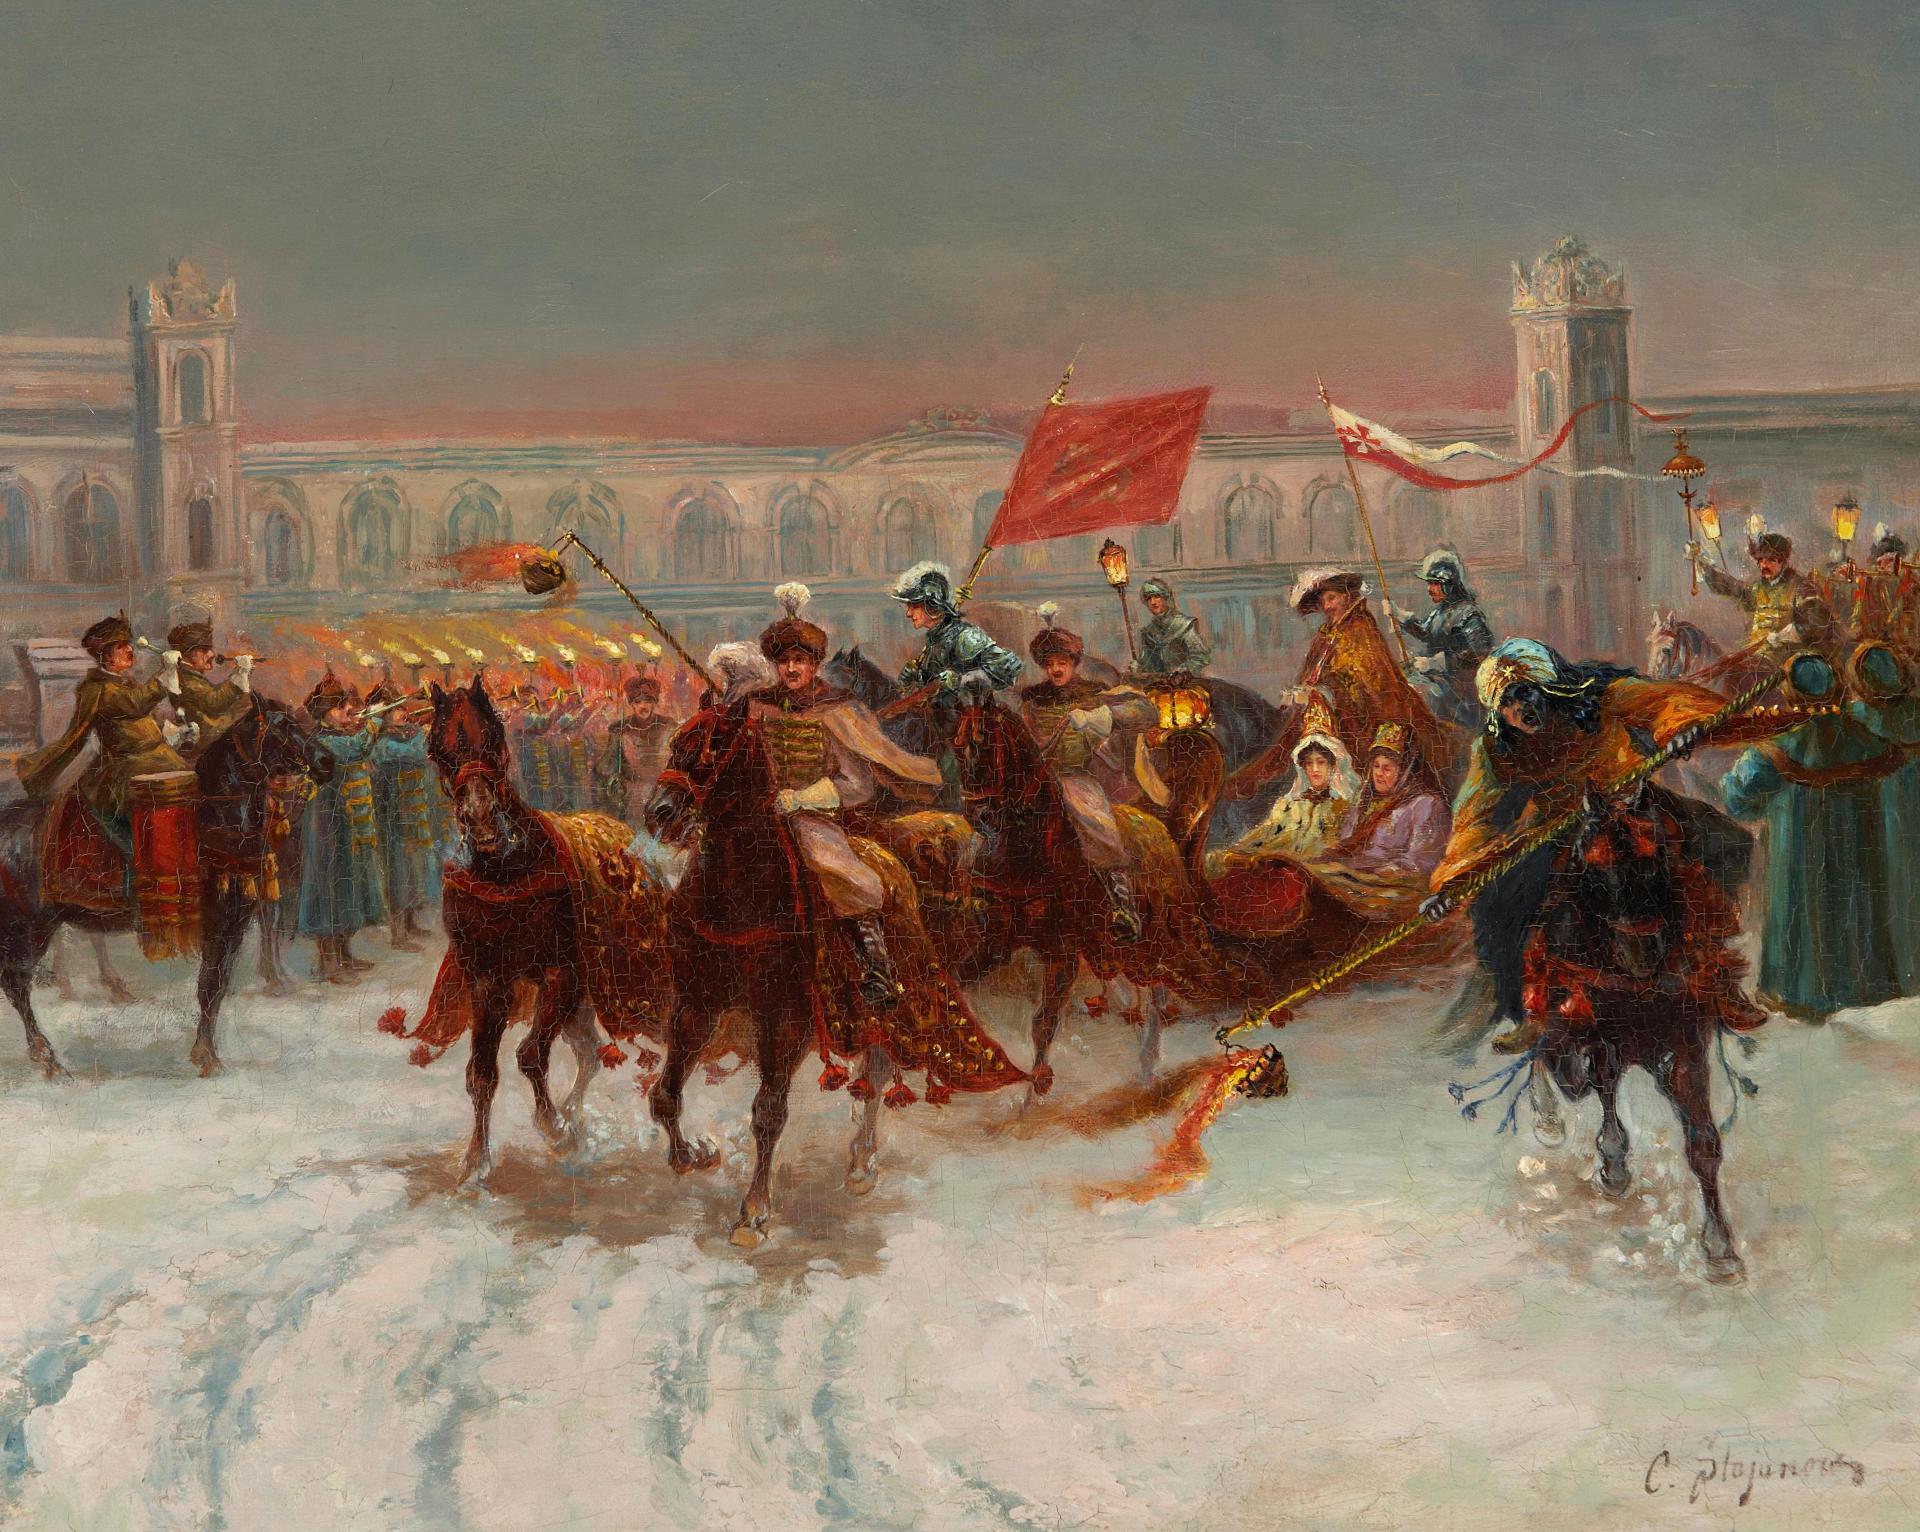 K. Stoyanov - Boyar's nighttime wedding procession, winter